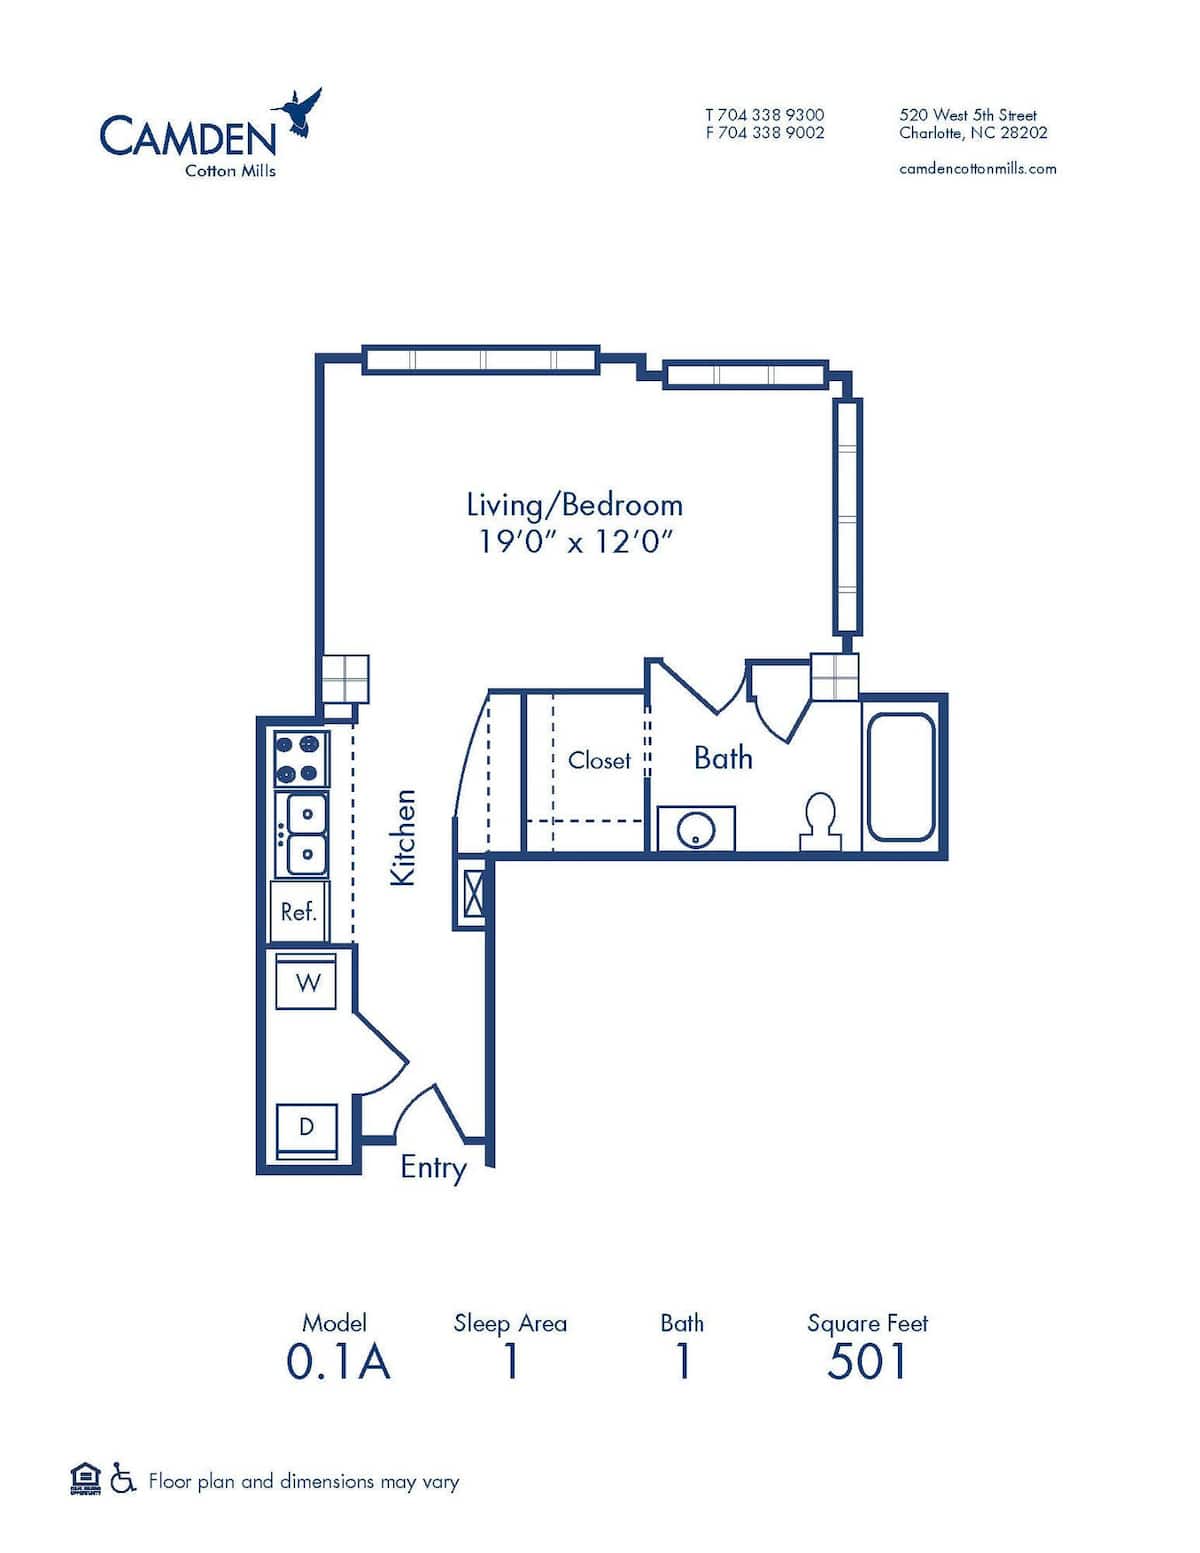 Floorplan diagram for 0.1A, showing Studio